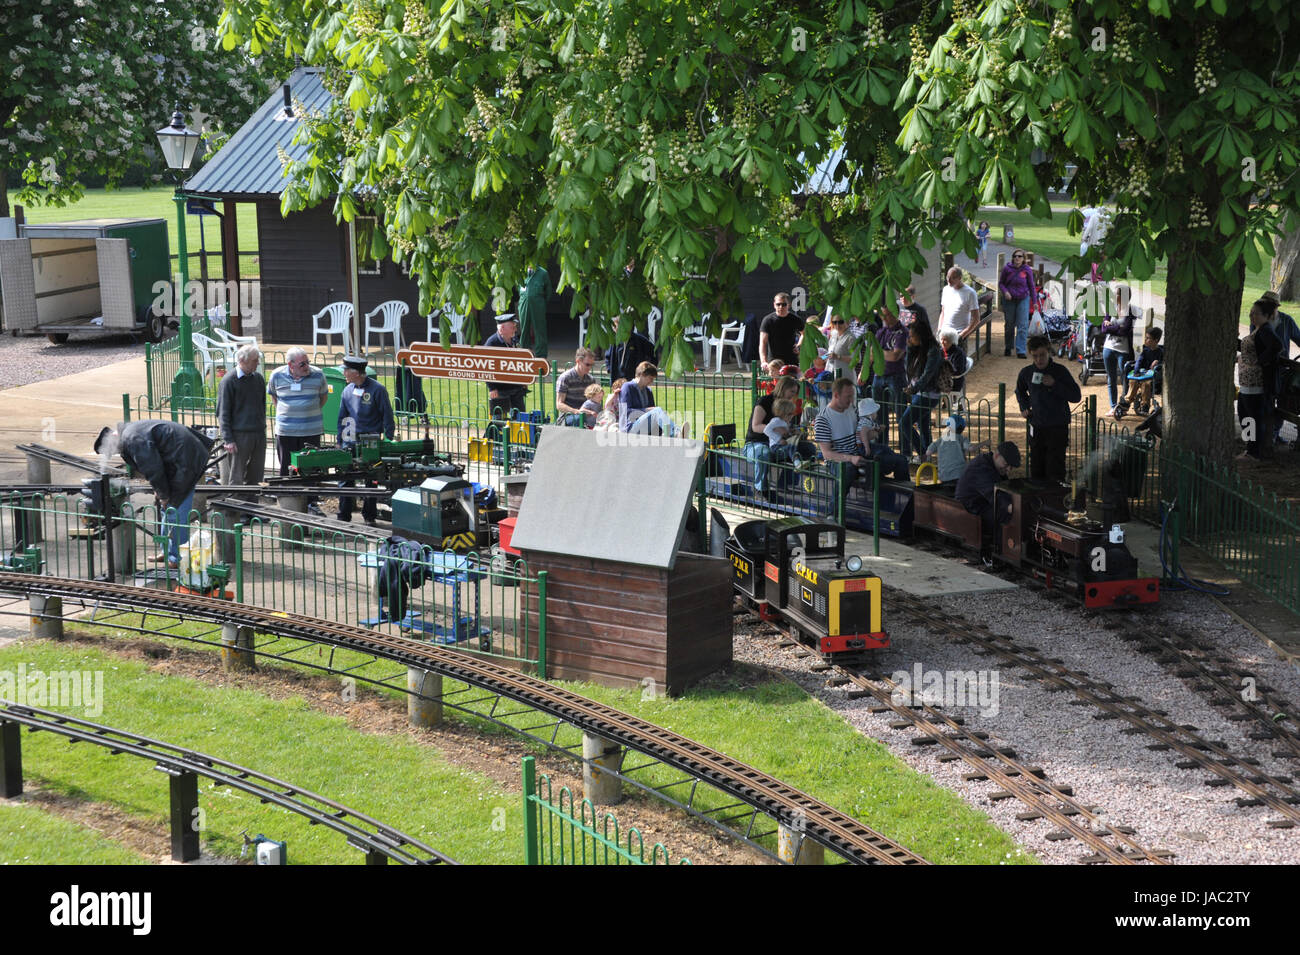 Miniature steam railway, Cutteslowe Park, Oxford Stock Photo